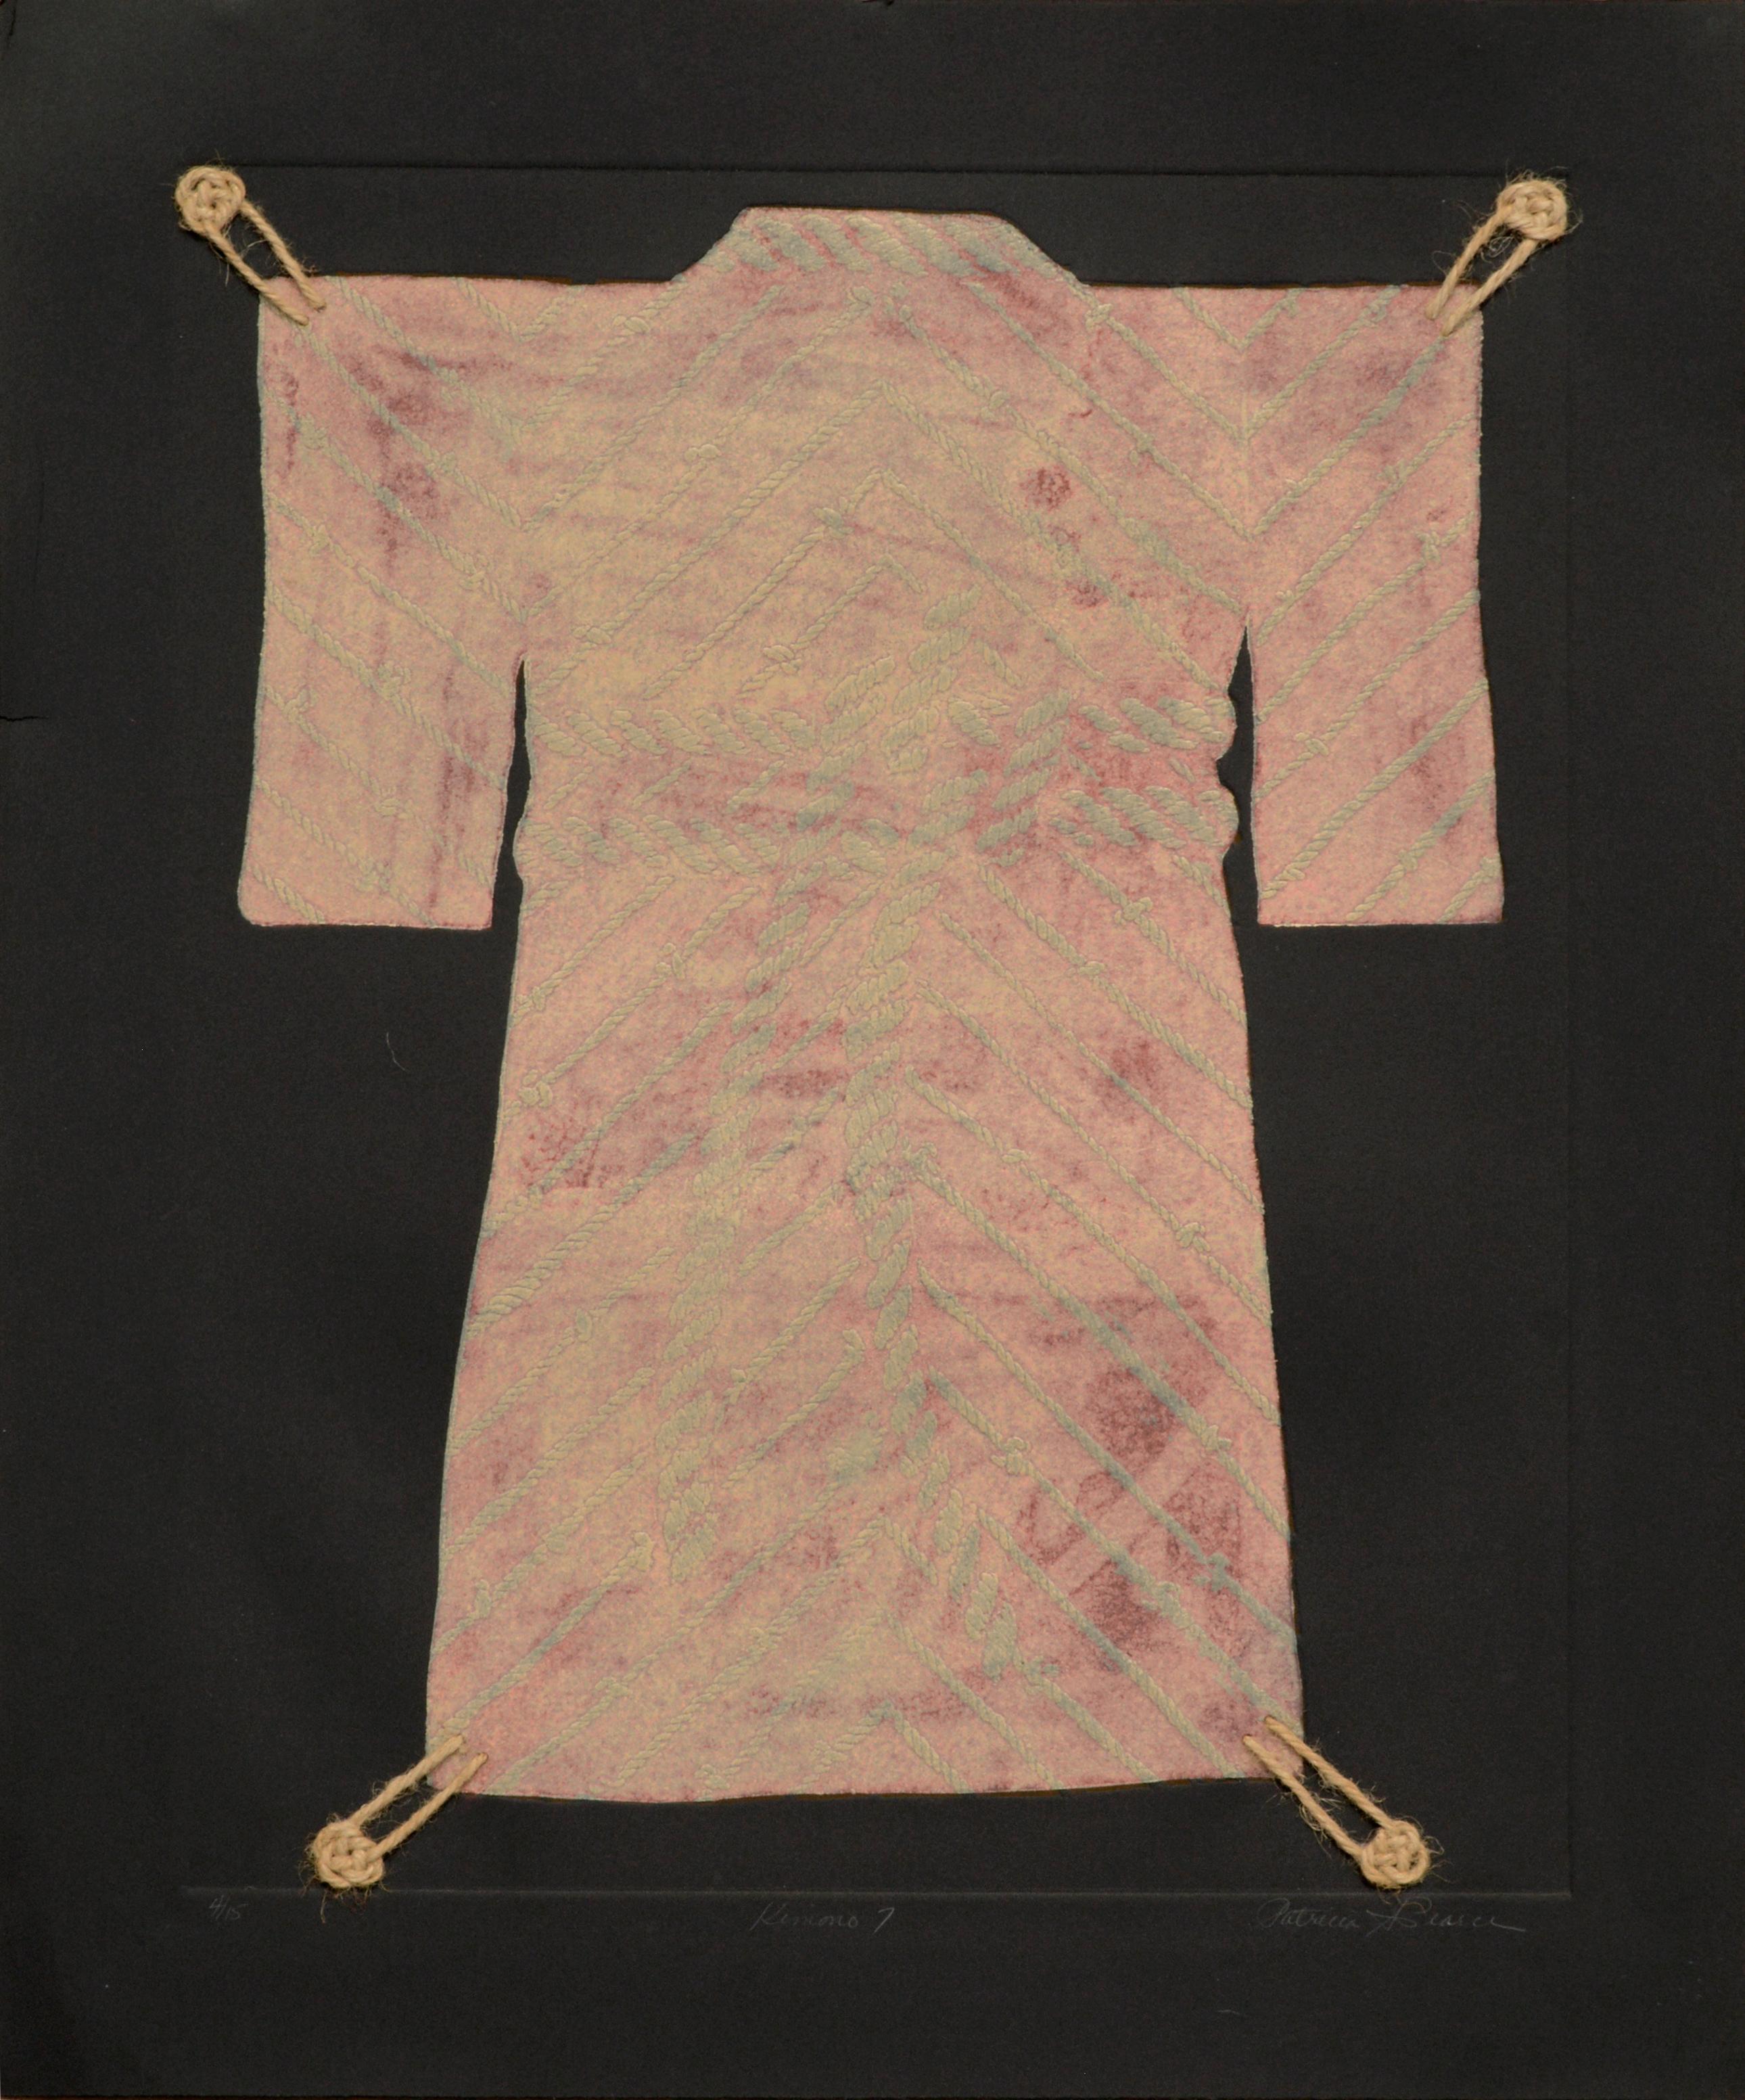 Patricia A Pearce Abstract Print - "Kimono 7" (Pink Rope Kimono with Twine)